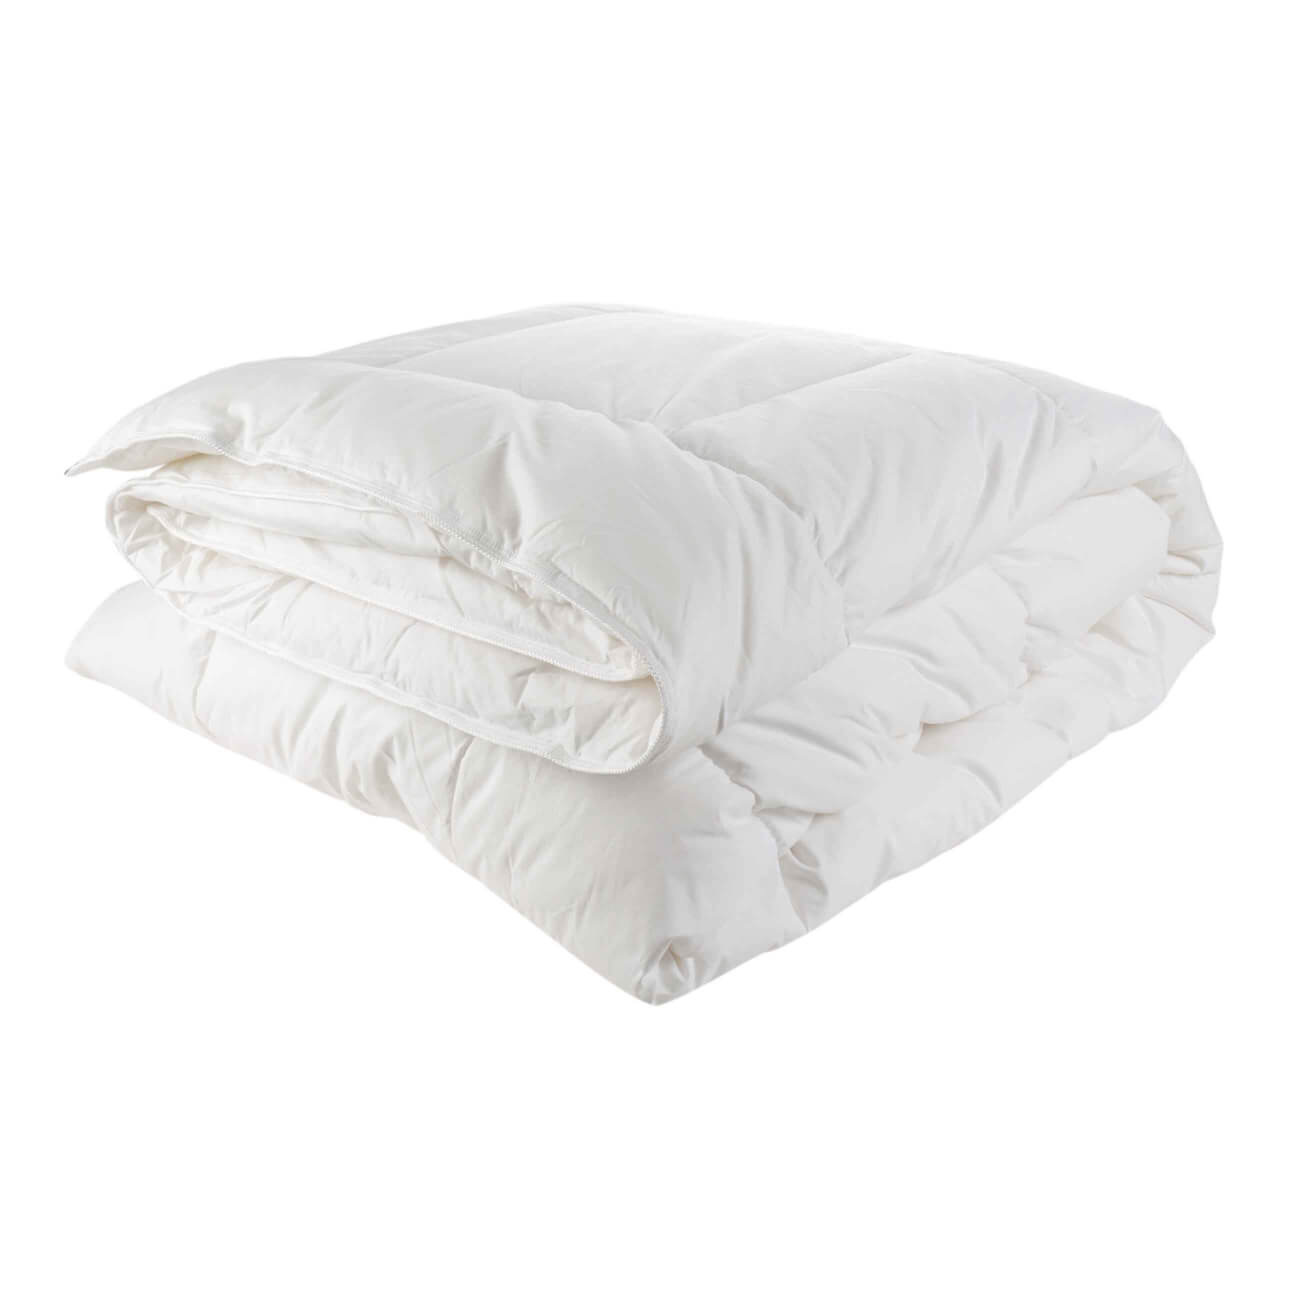 Одеяло, 140х200 см, хлопок/микрофибра, Soft cotton одеяло 140х200 см микрофибра simply soft